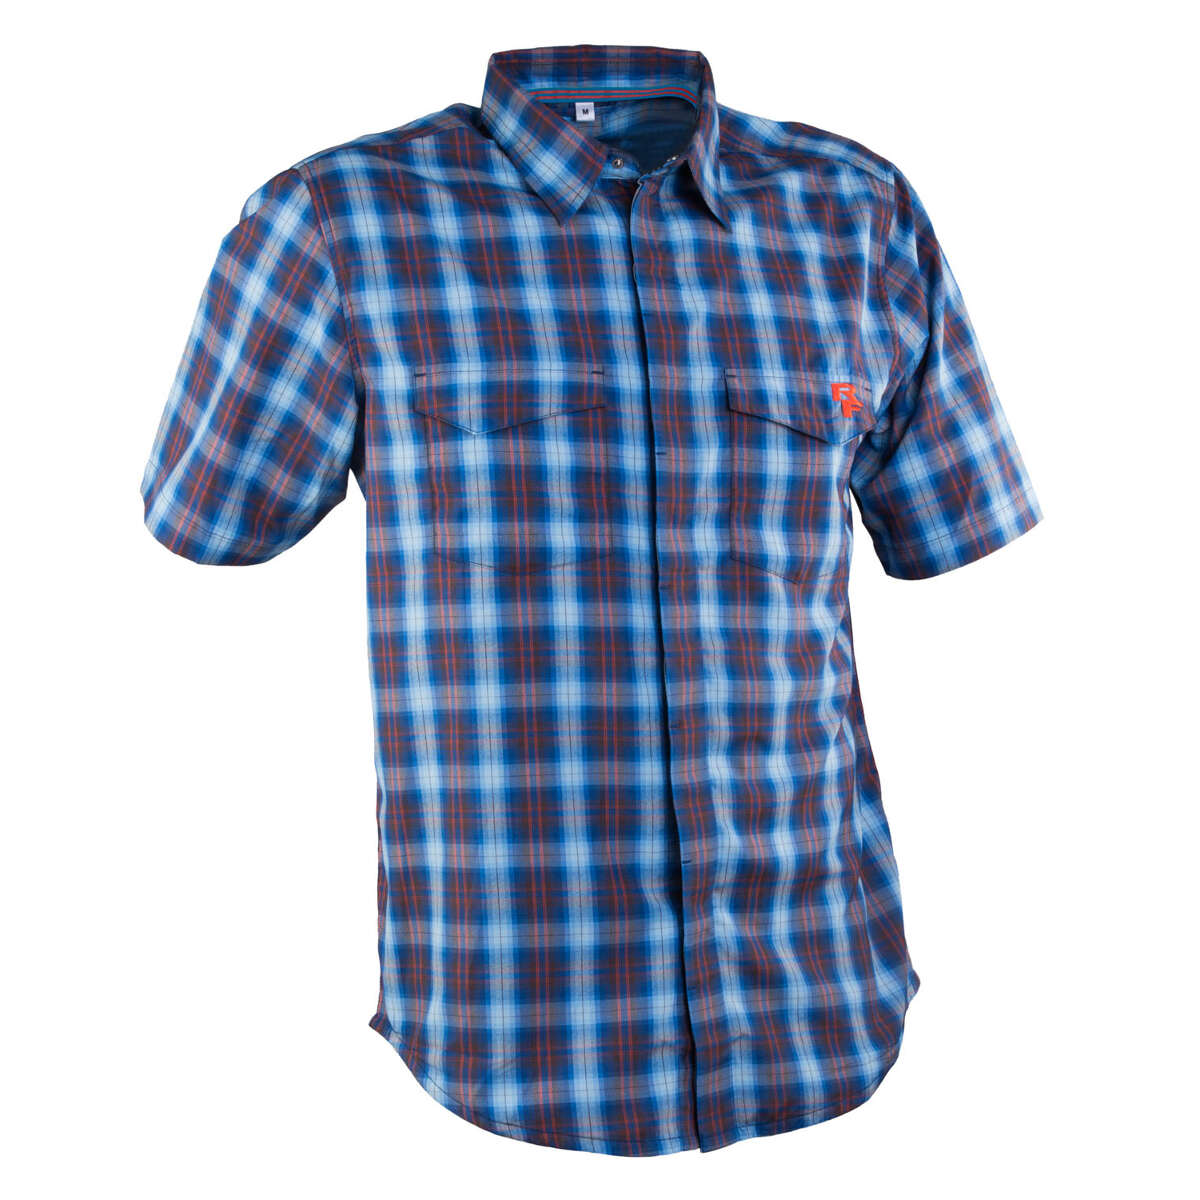 Race Face Shirt Short Sleeve Shop Blue Plaid